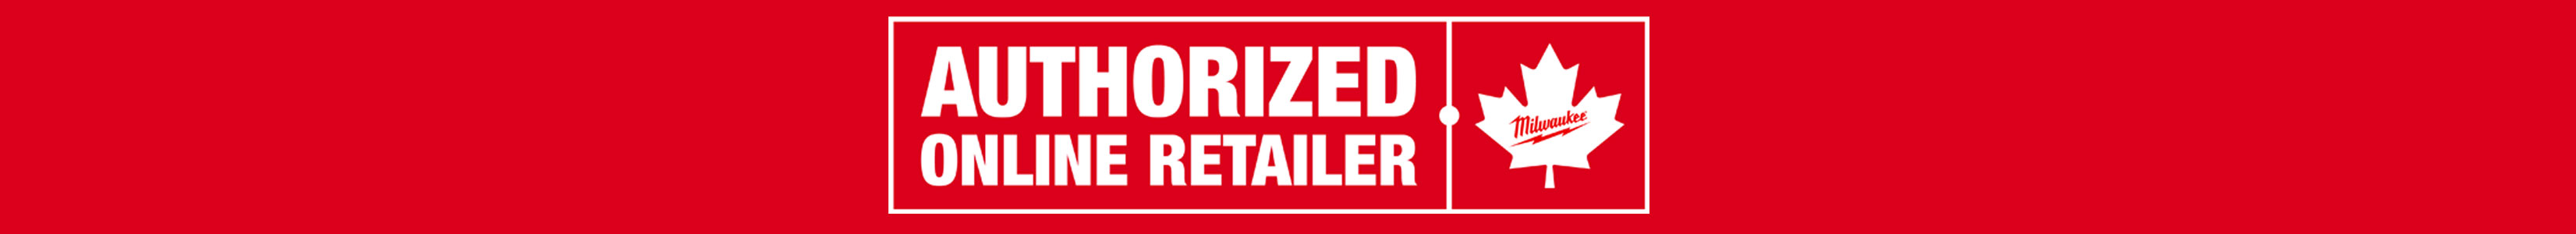 Authorized Online Retailer